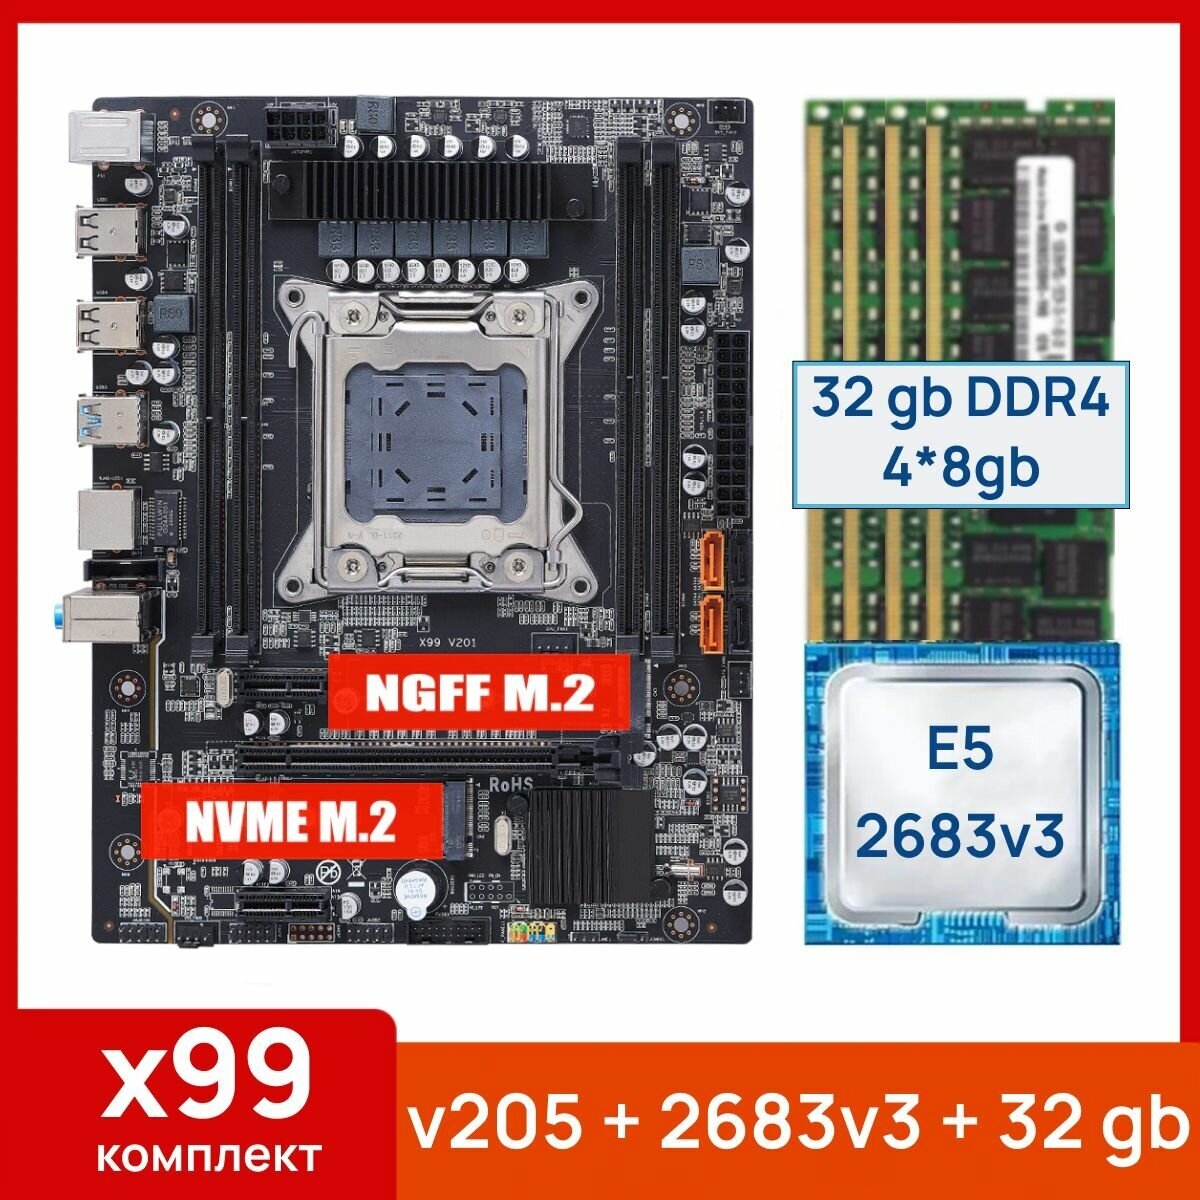 Комплект: Atermiter x99 v205 + Xeon E5 2683v3 + 32 gb(4x8gb) DDR4 ecc reg